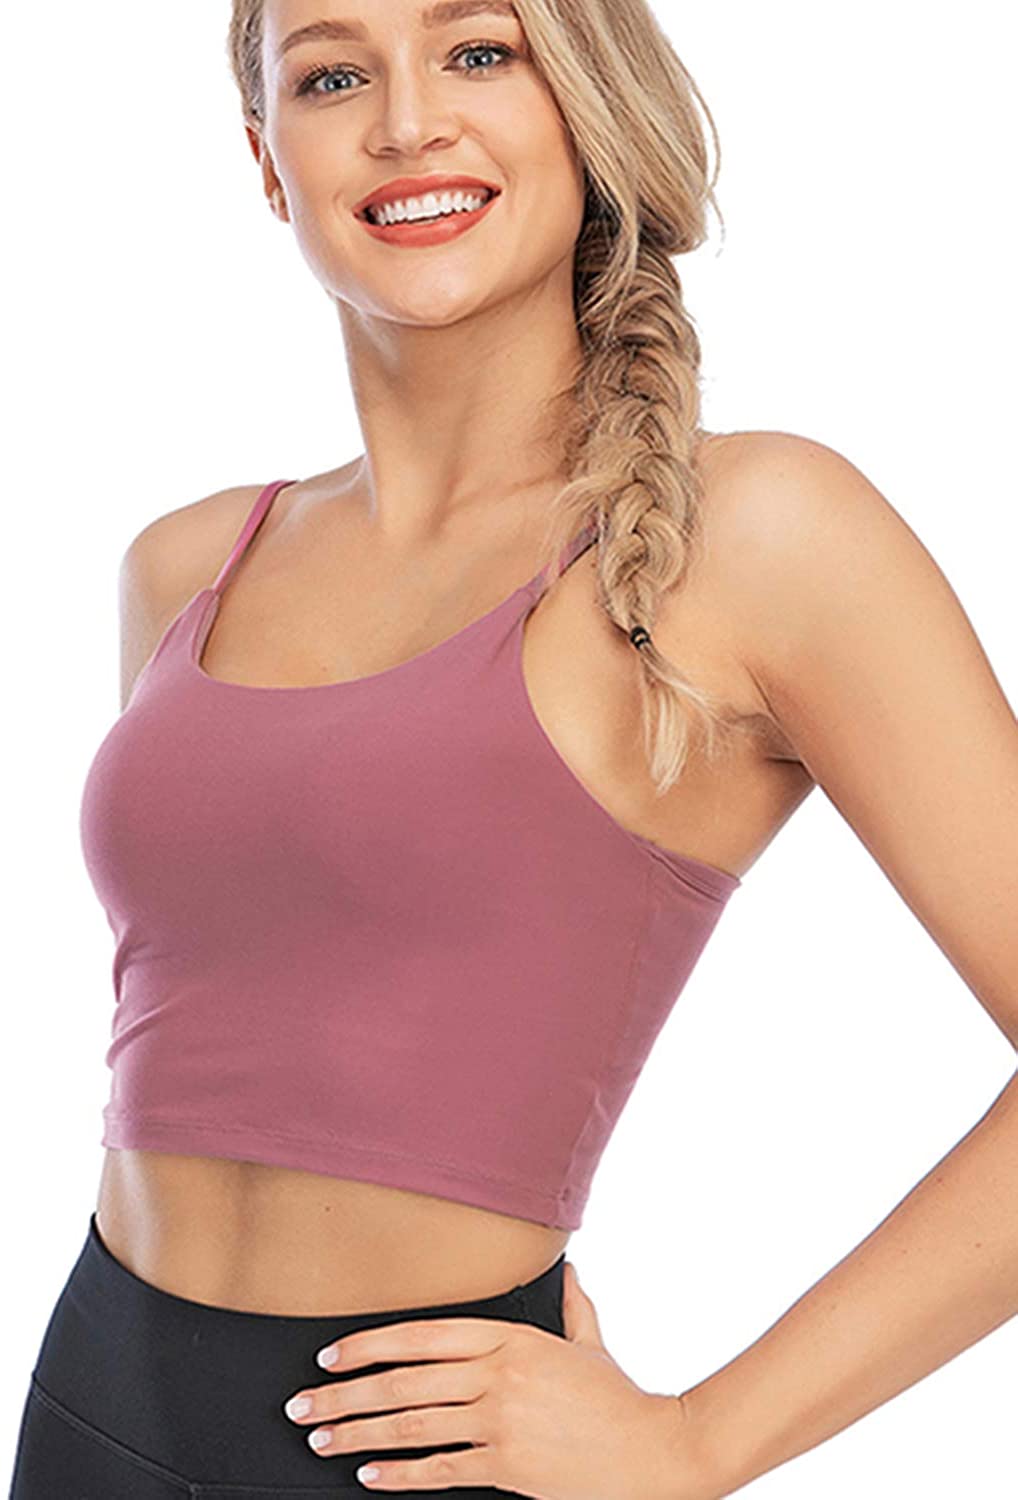 DODOING Women Padded Sports Bra Fitness Workout Running Shirts Yoga Crop Tank Tops Bra Longline Camisole Bras